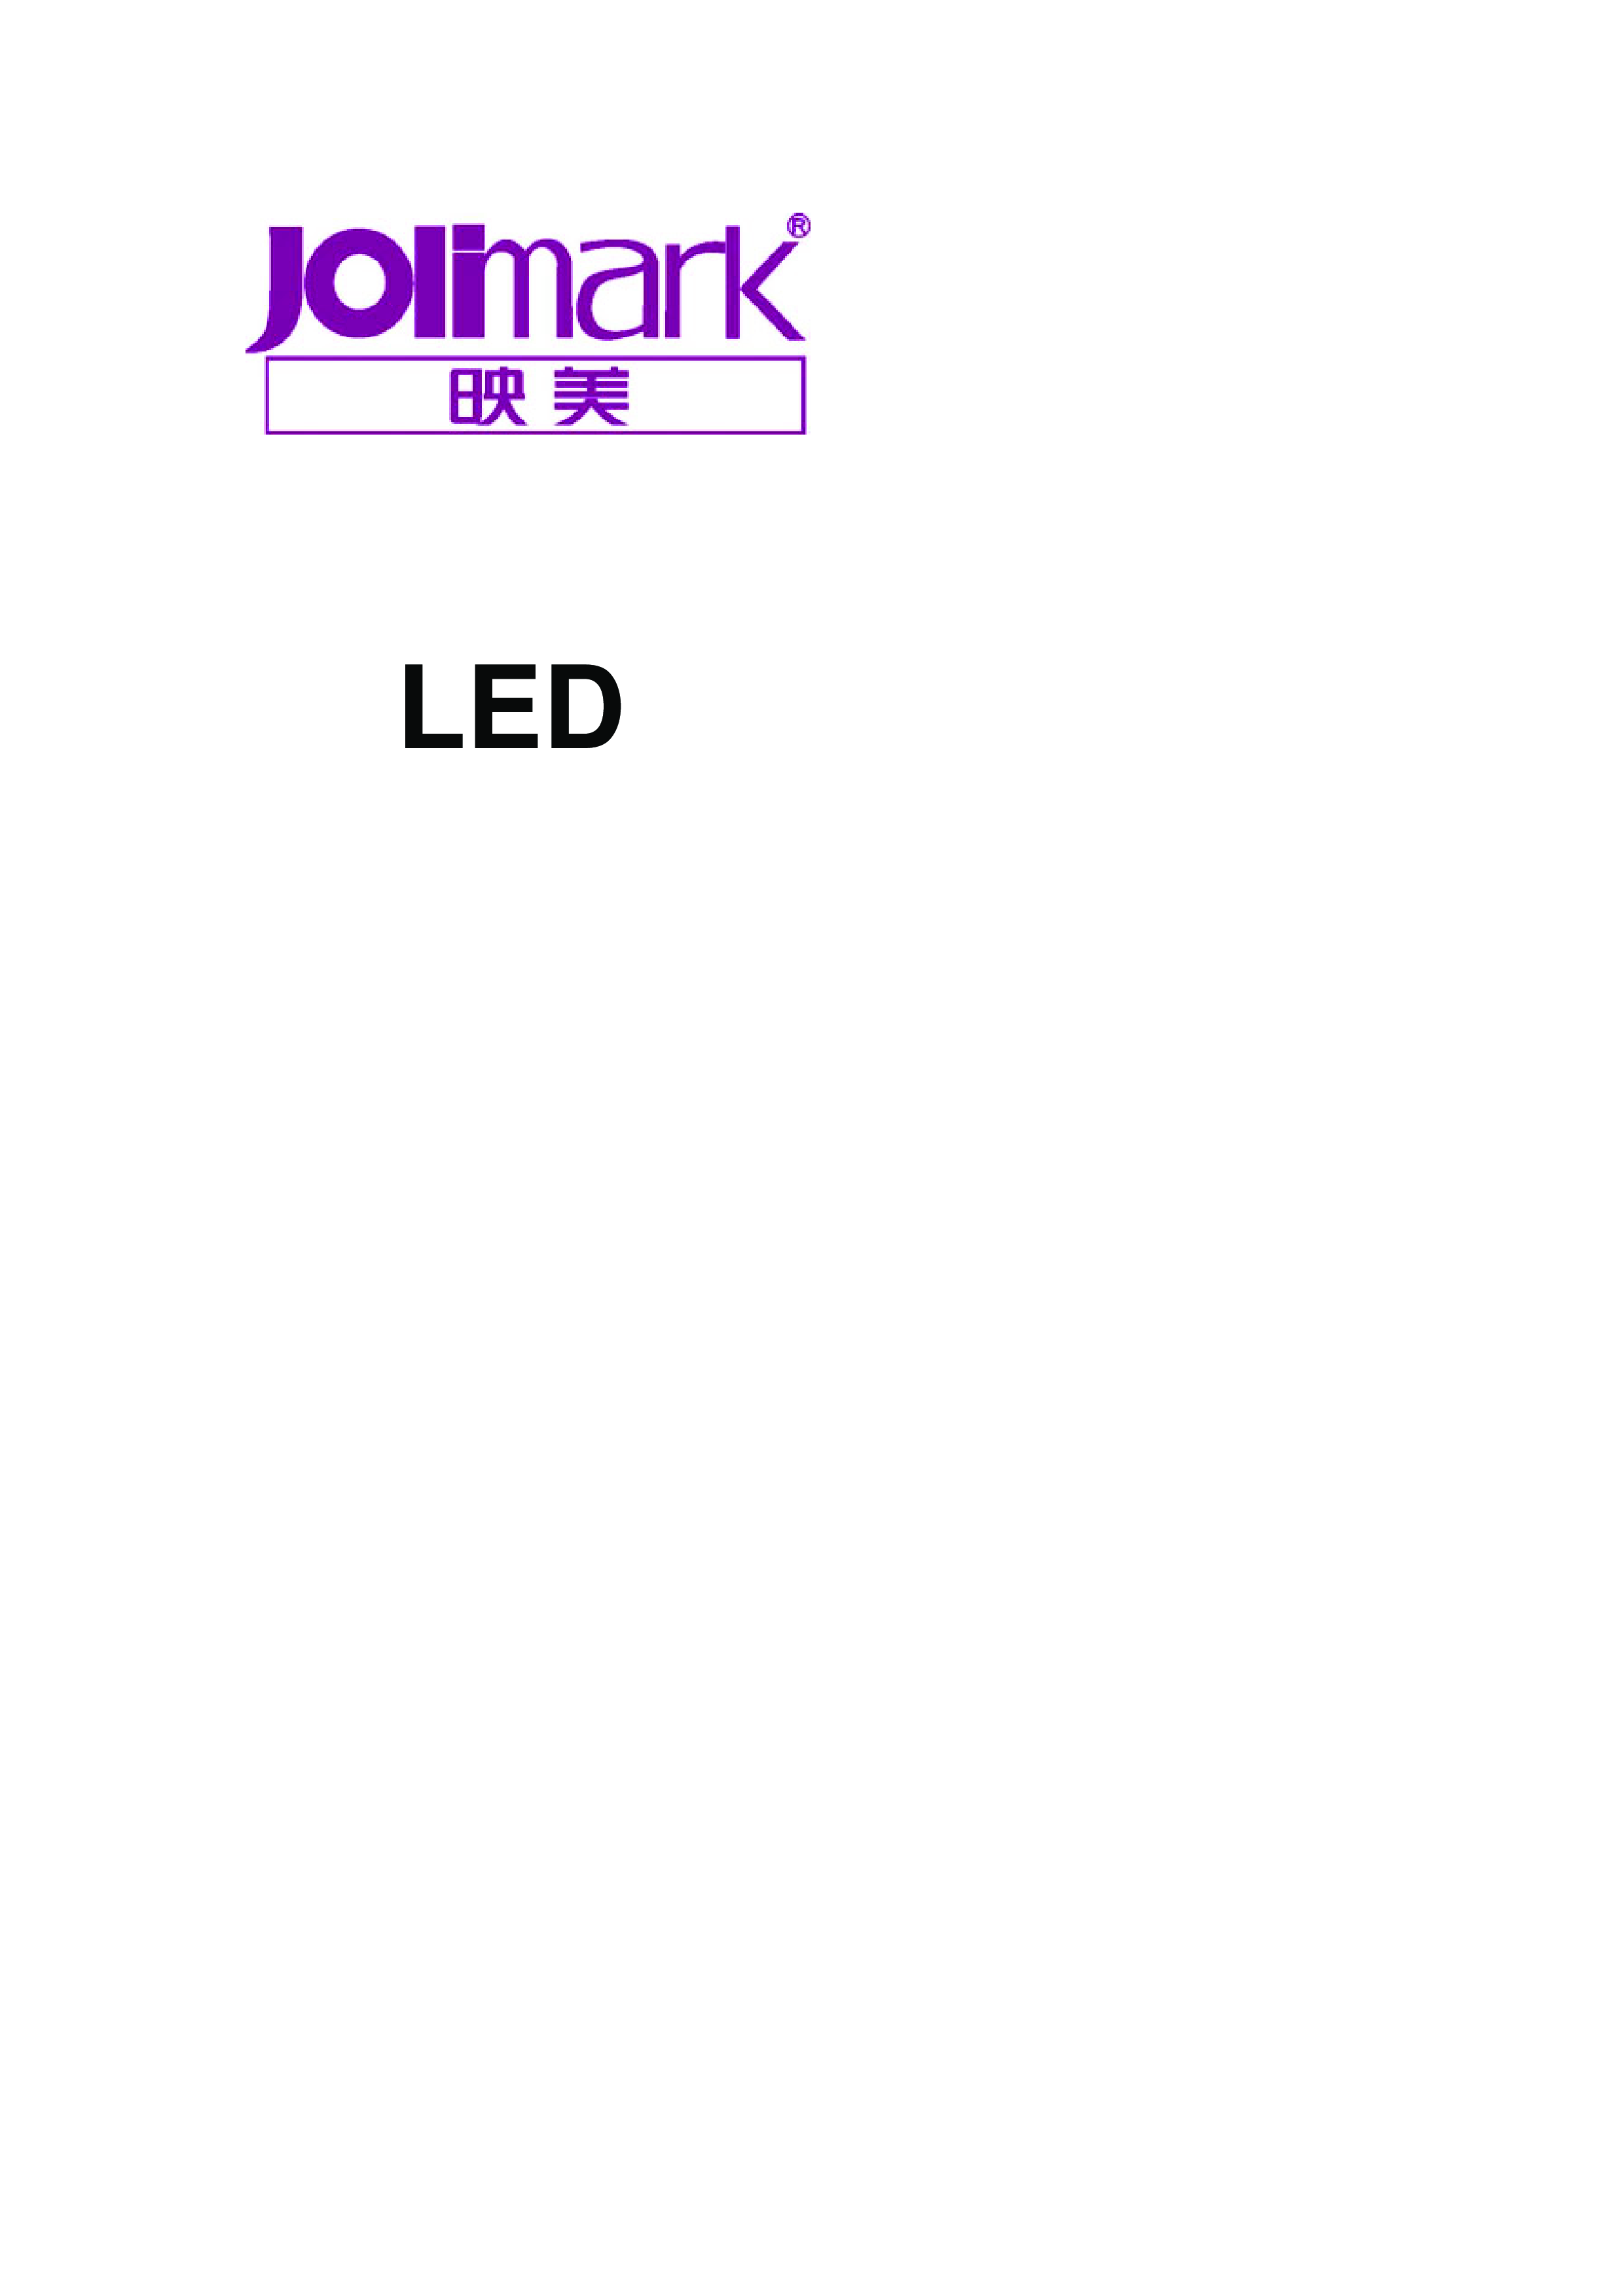 映美 Jolimark LED-SETUP 用户手册 封面